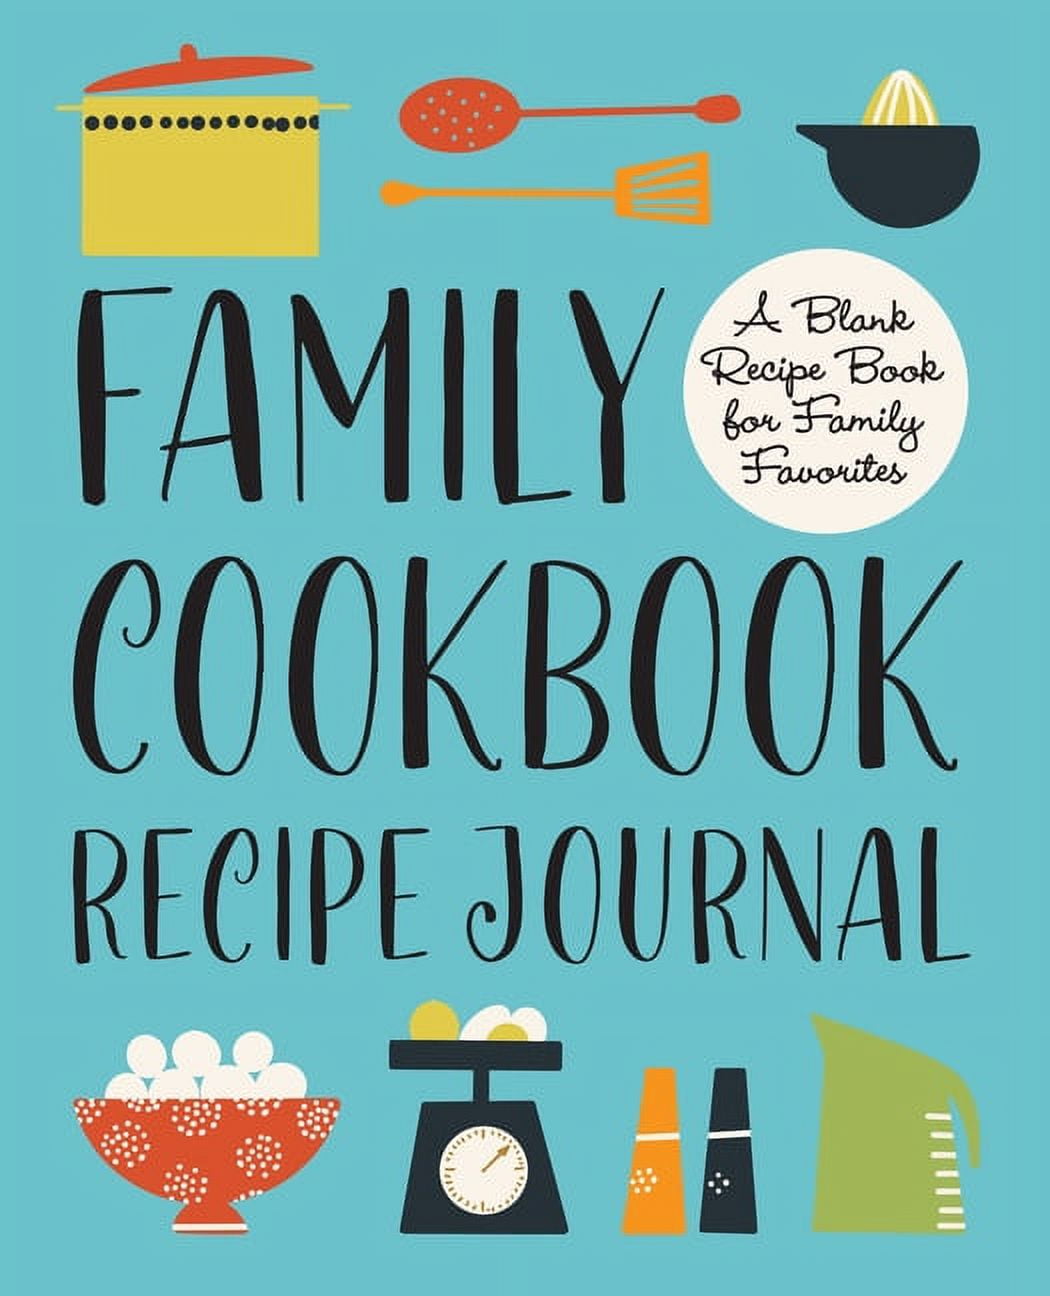 Family Recipe Book: Cute Cupcake Print (1) - Collect & Write Family Recipe  Organizer - [Professional] (Paperback), Octavia Books